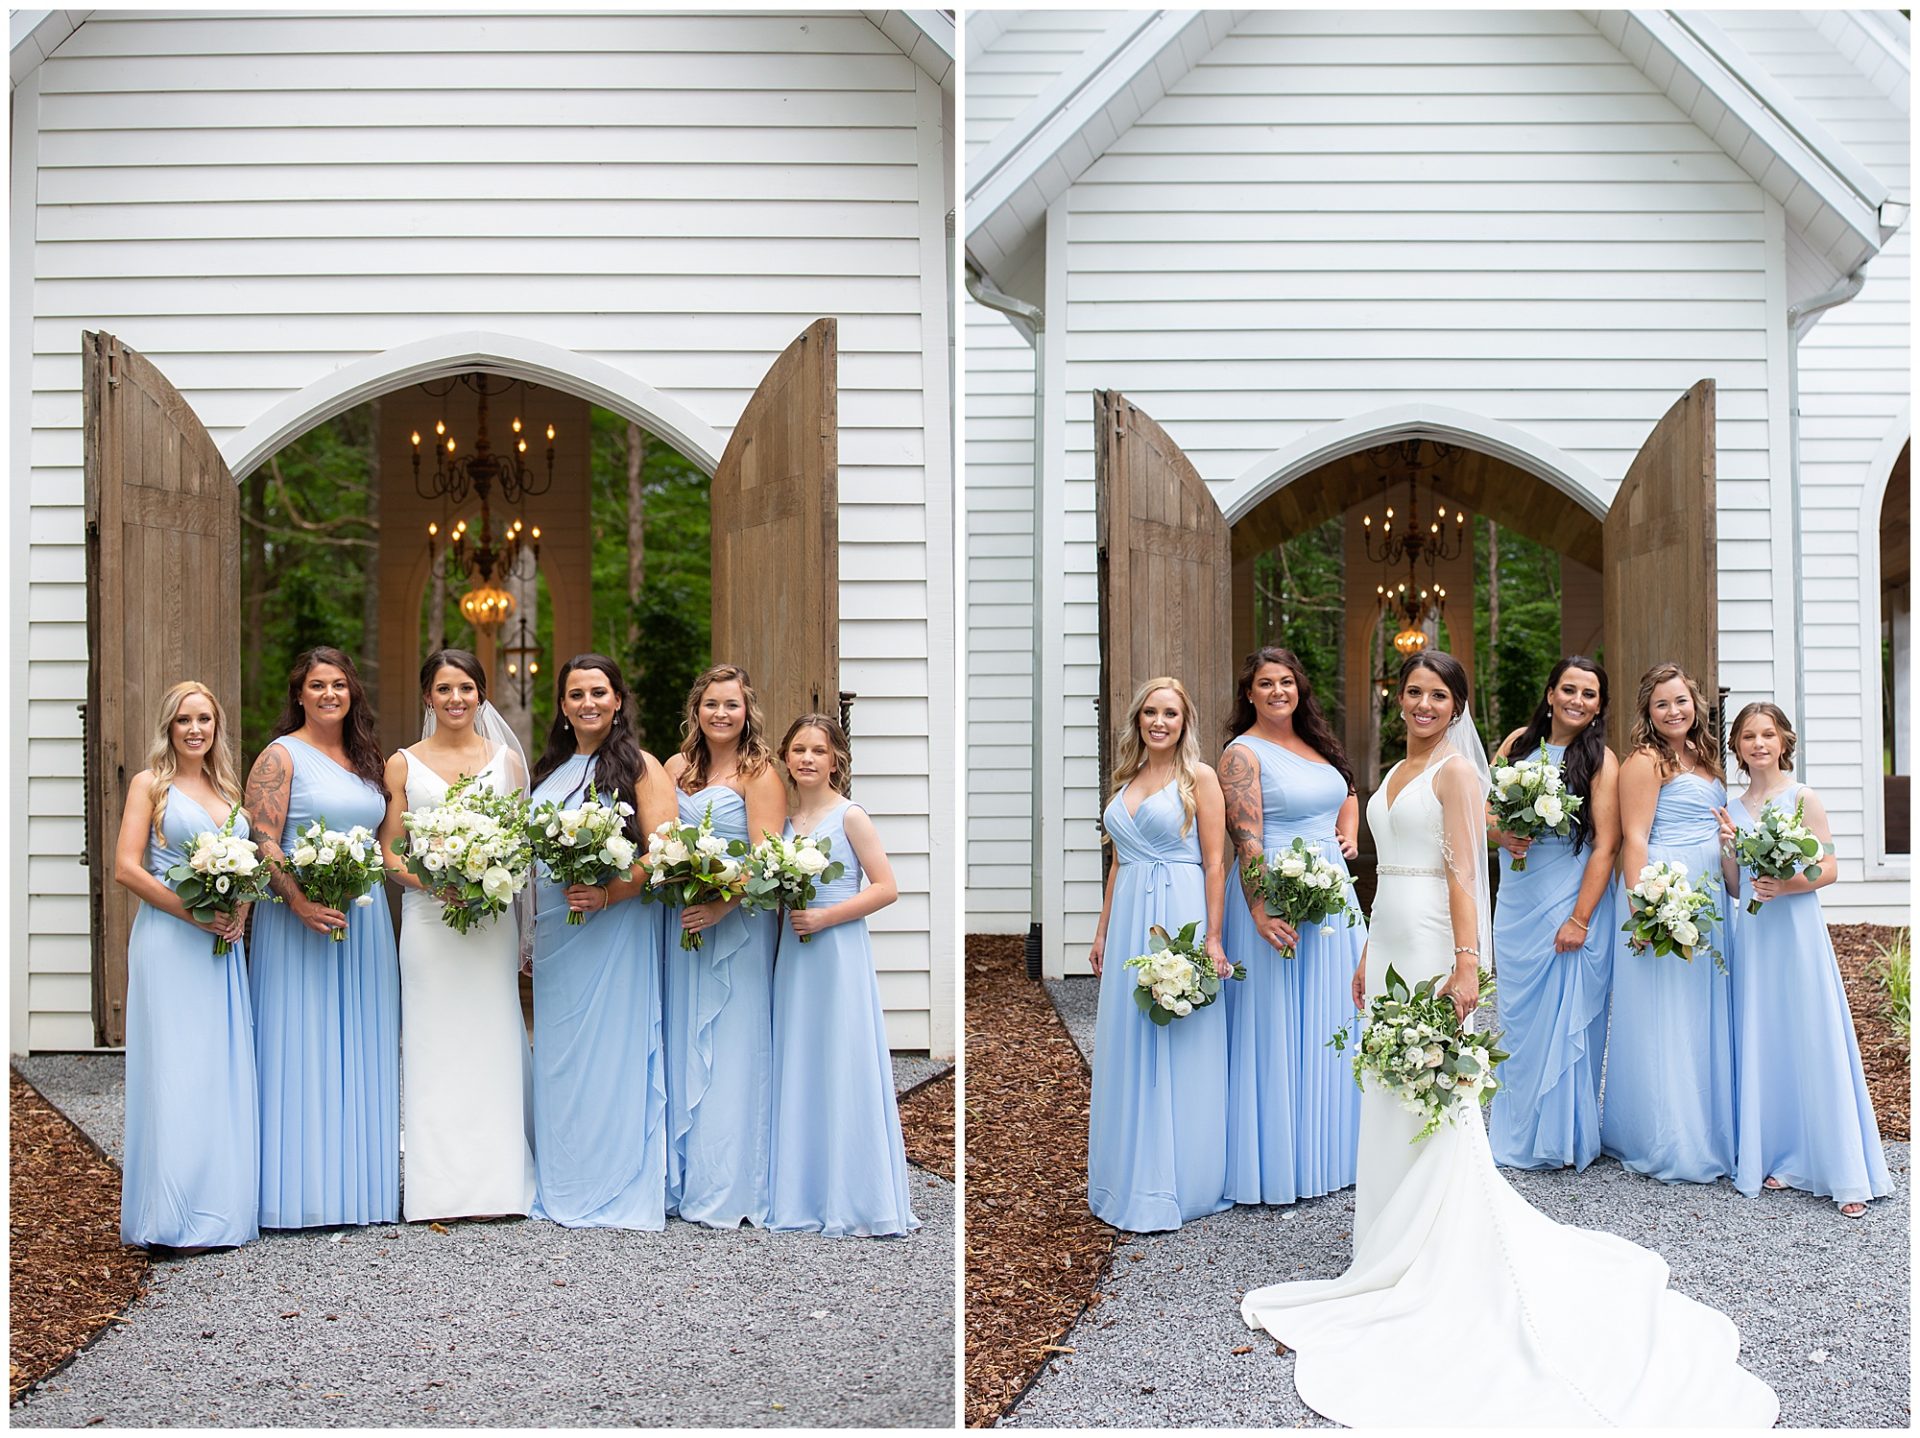 Chapel in the woods, firefly lane wedding, nashville wedding, open air chapel, bridesmaids in robins egg blue, sky blue bridesmaids